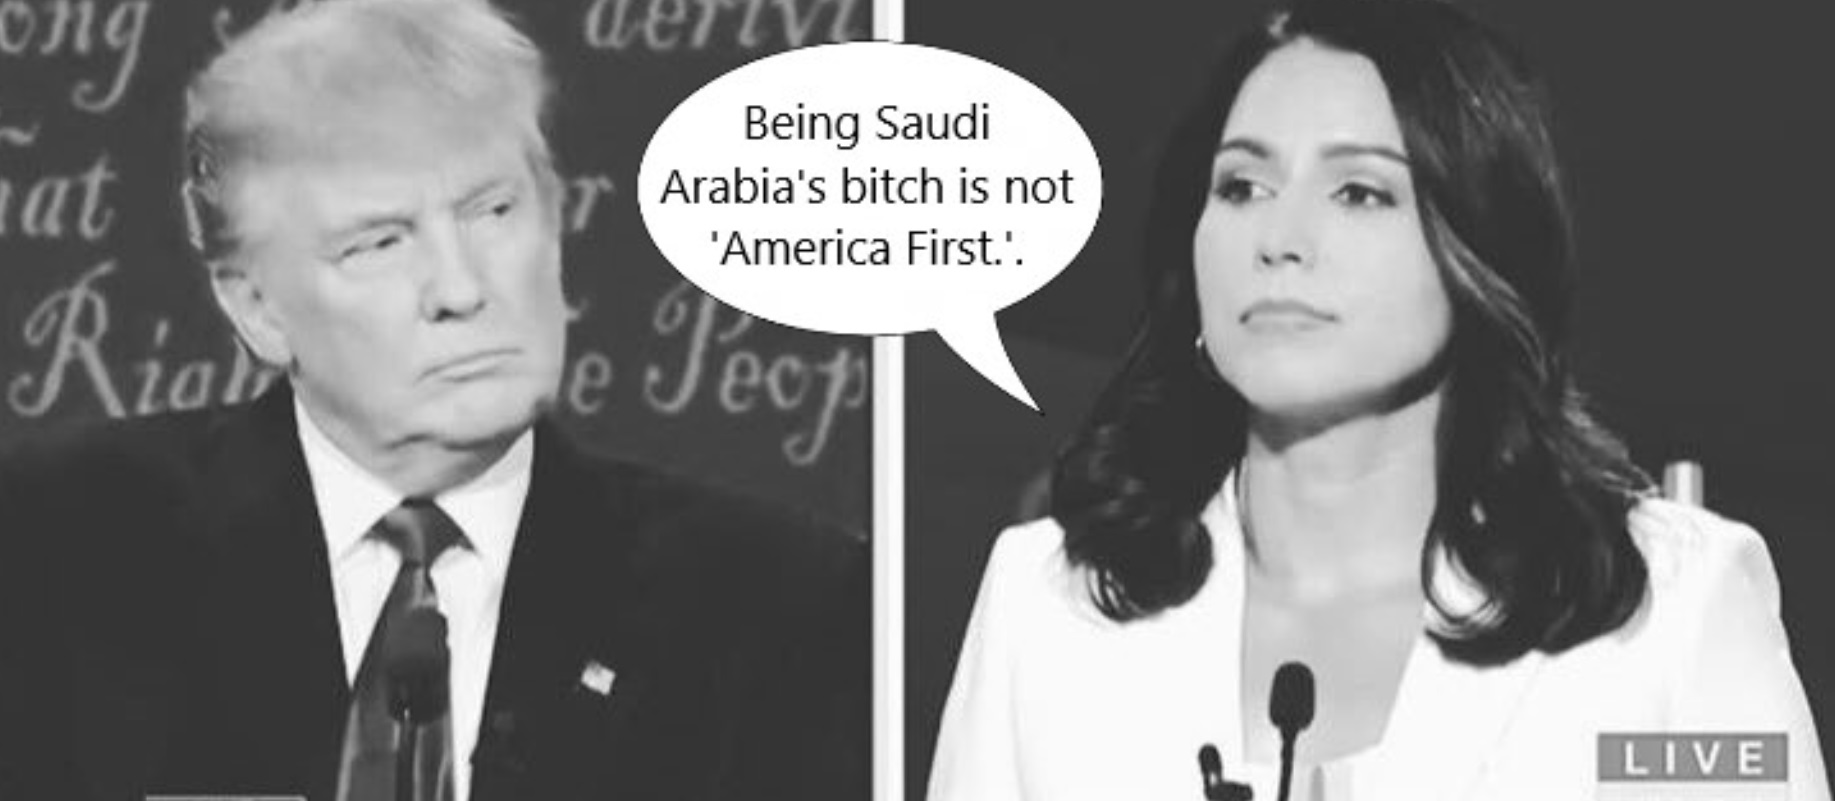 PHOTO Tulsi Gabbard Telling Donald Trump Being Saudi Arabia's Bitch Is Not America First